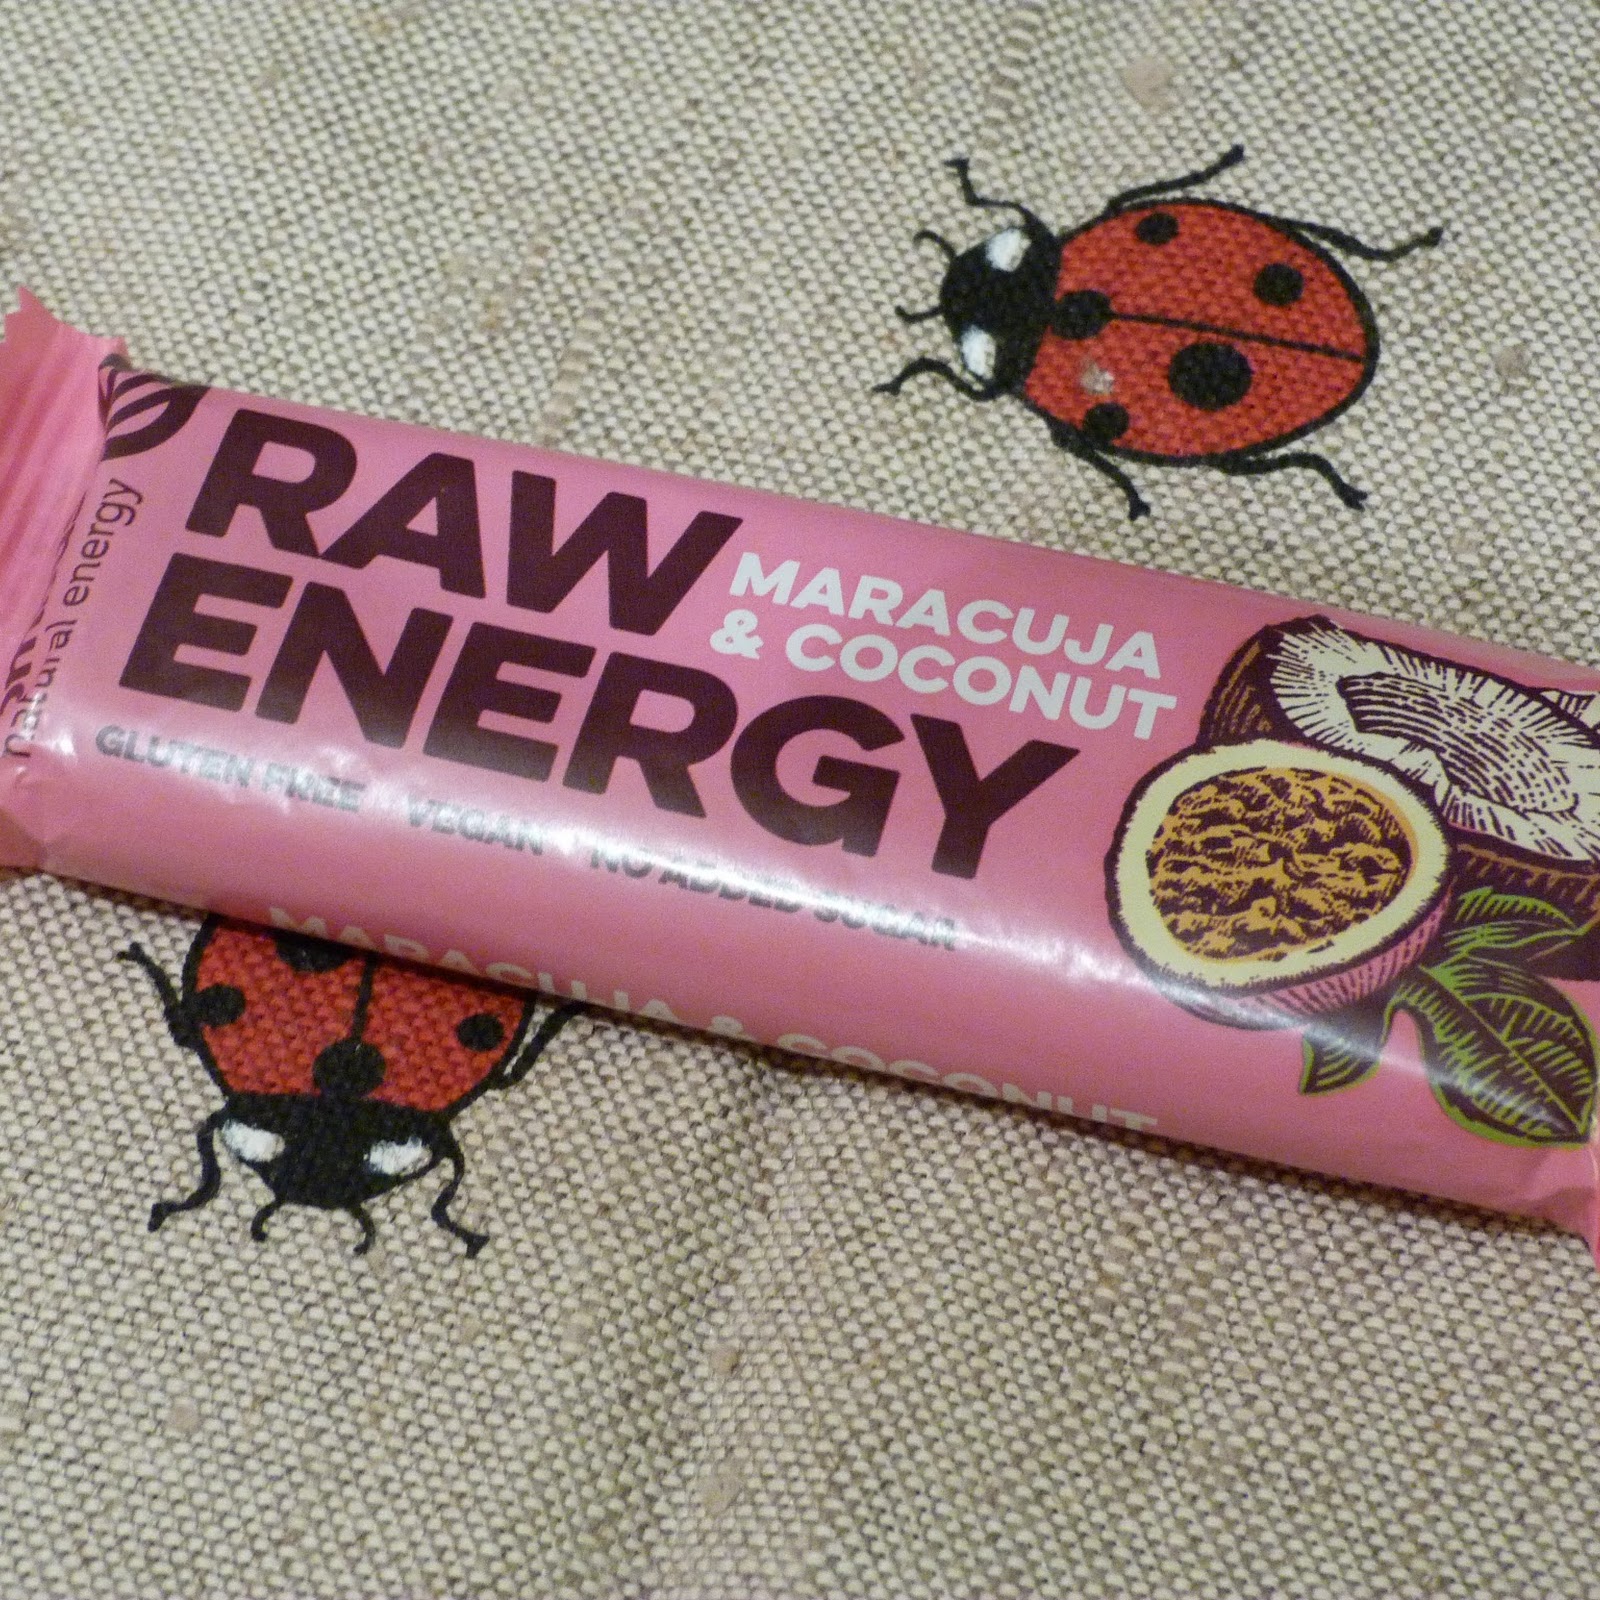 Raw energy maracuja&coconut (Bombus natural energy)